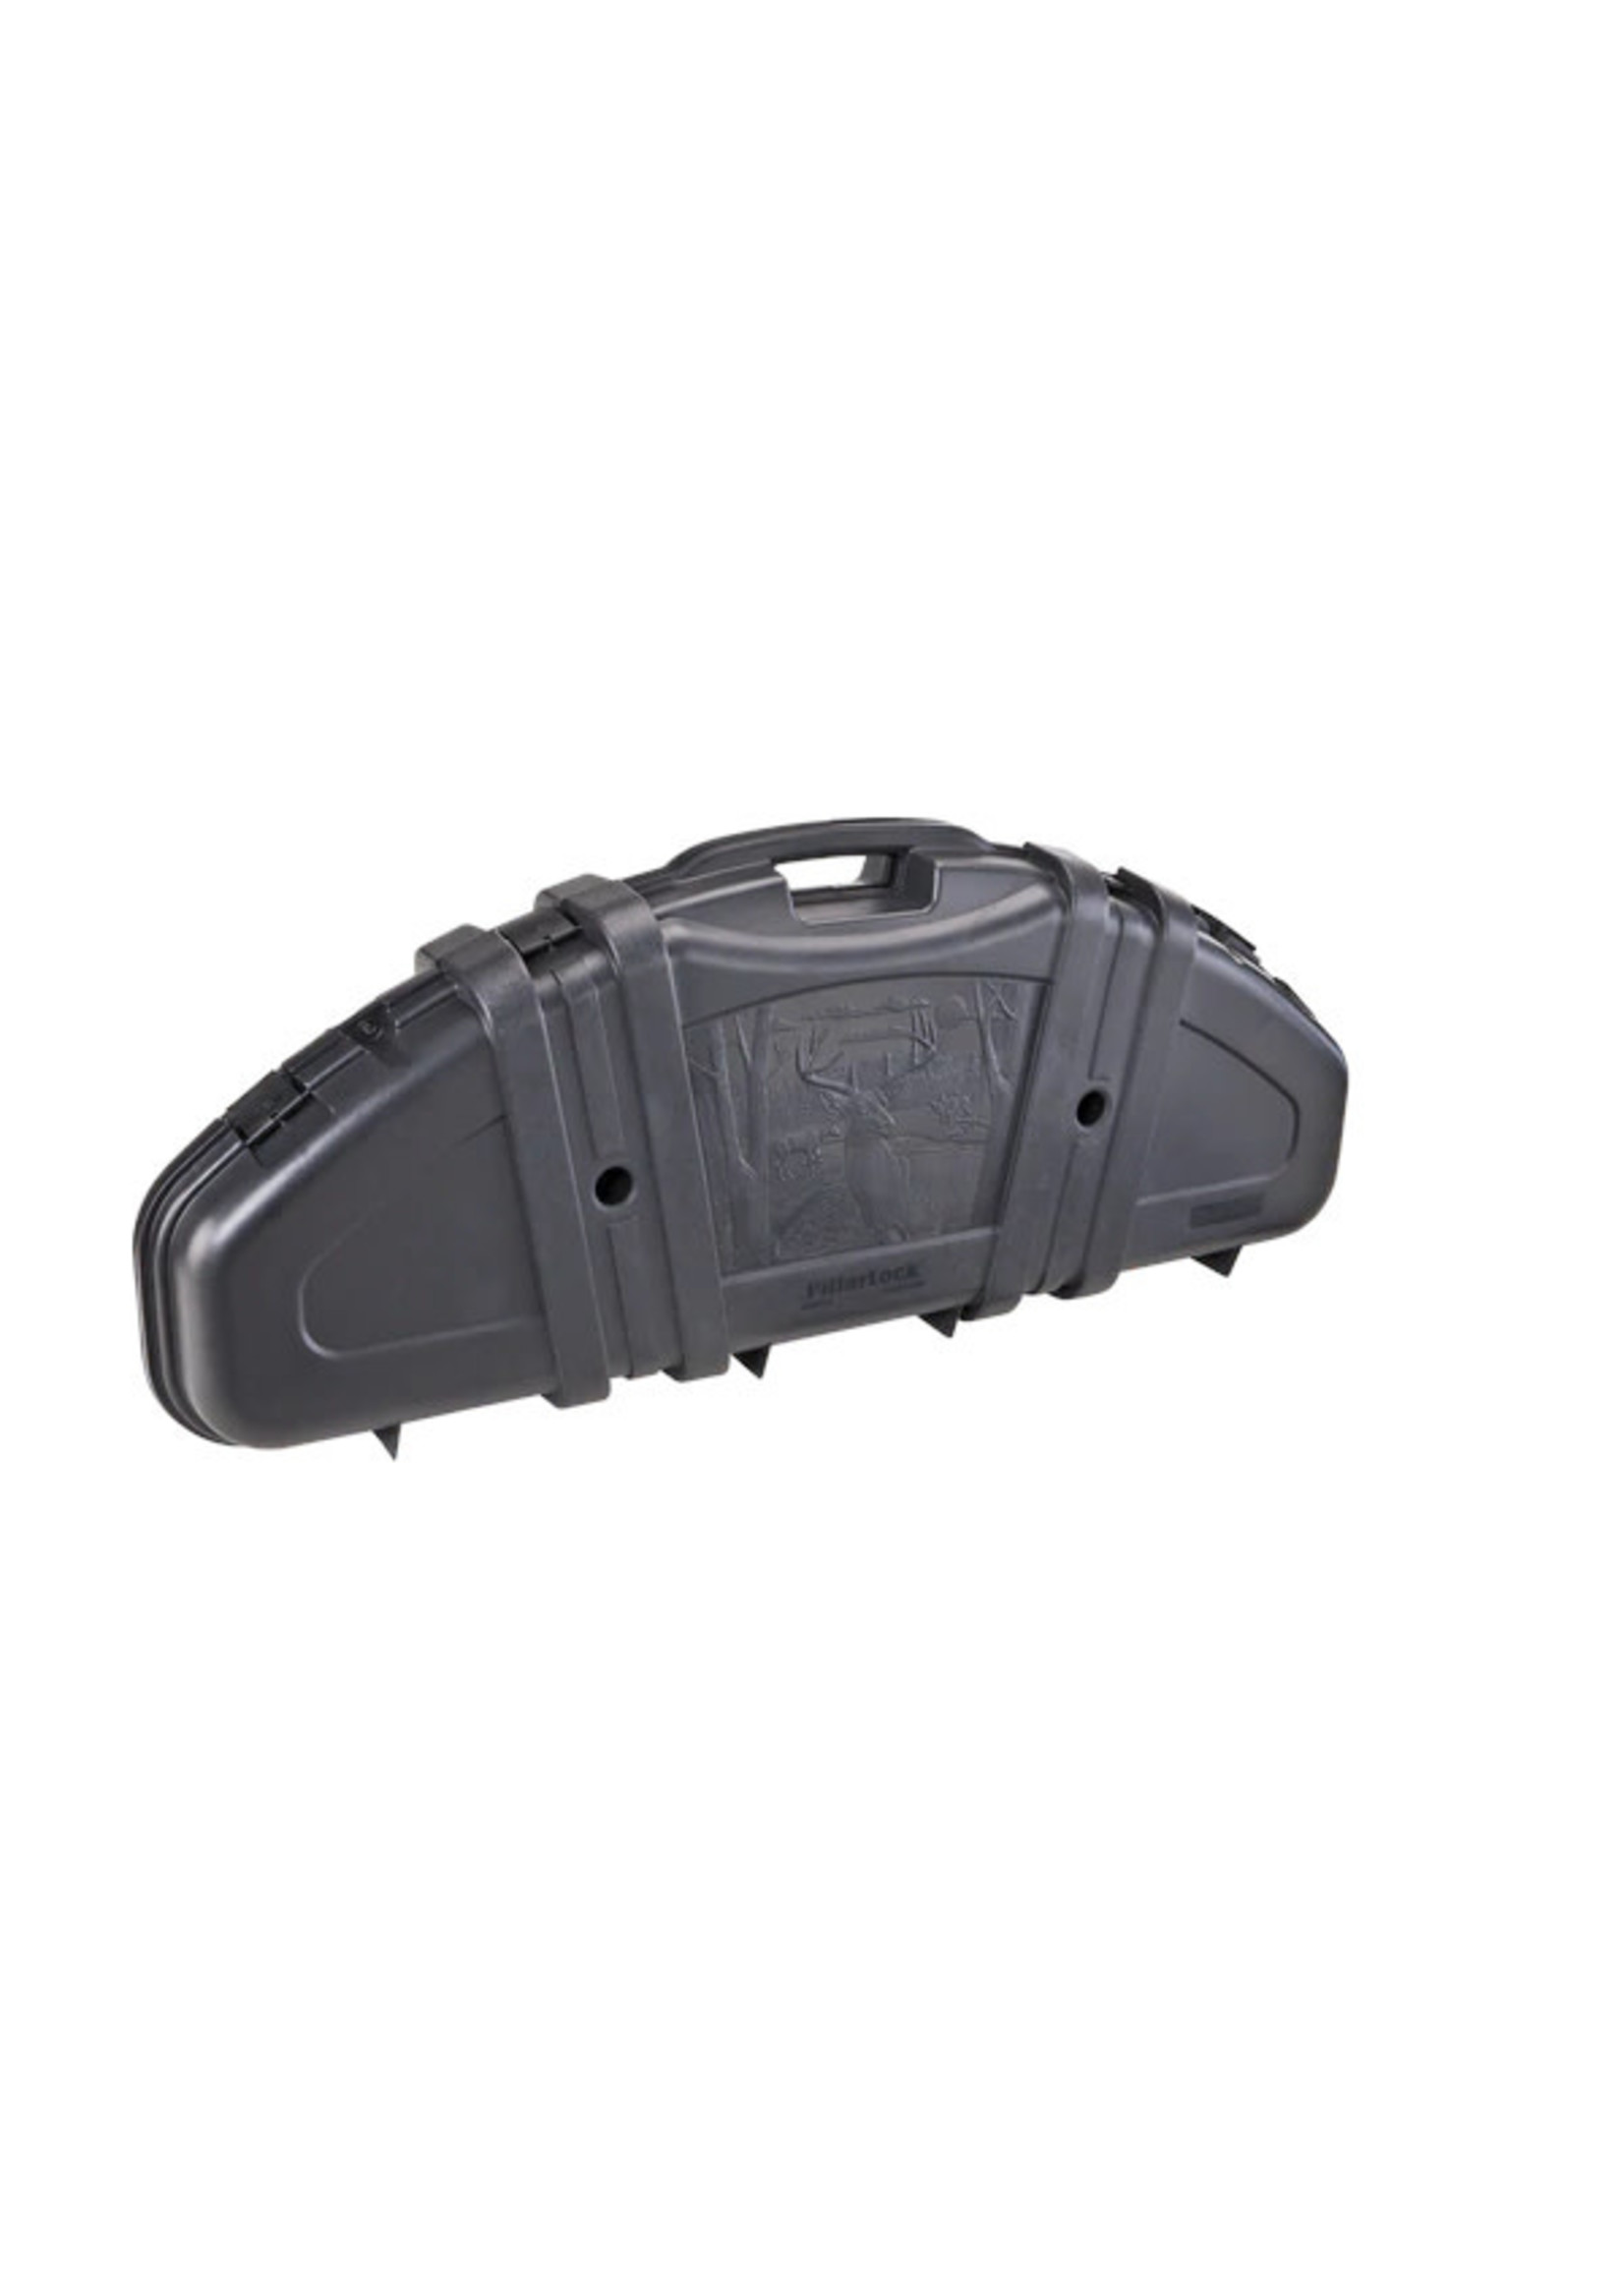 Plano Protector Series® Single Bow Case SKU 111100